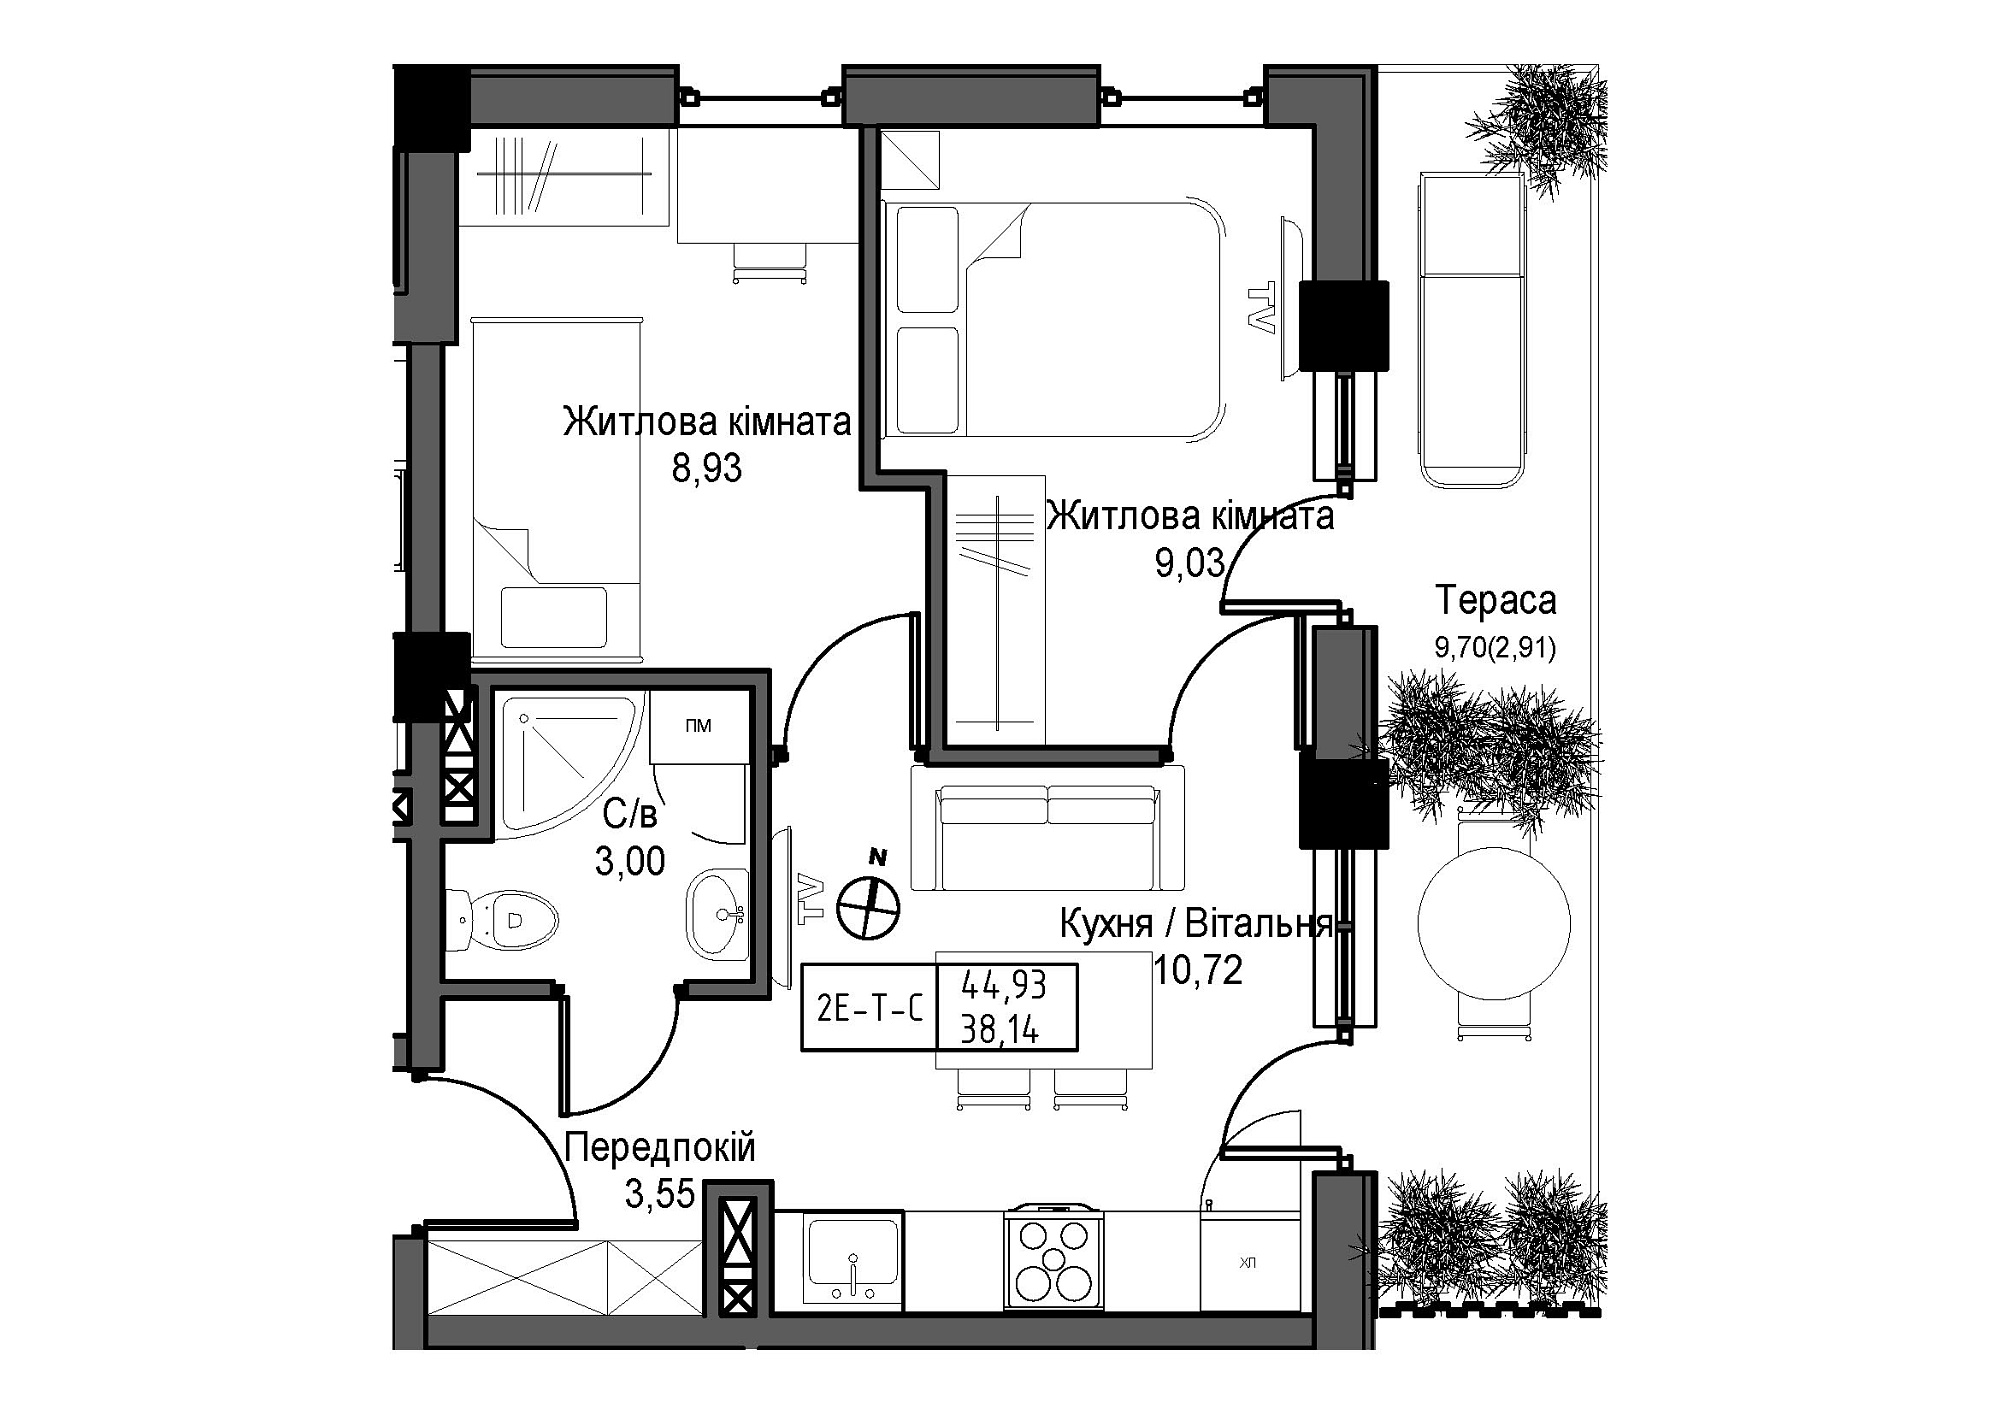 Планування 2-к квартира площею 38.14м2, UM-007-08/0003.